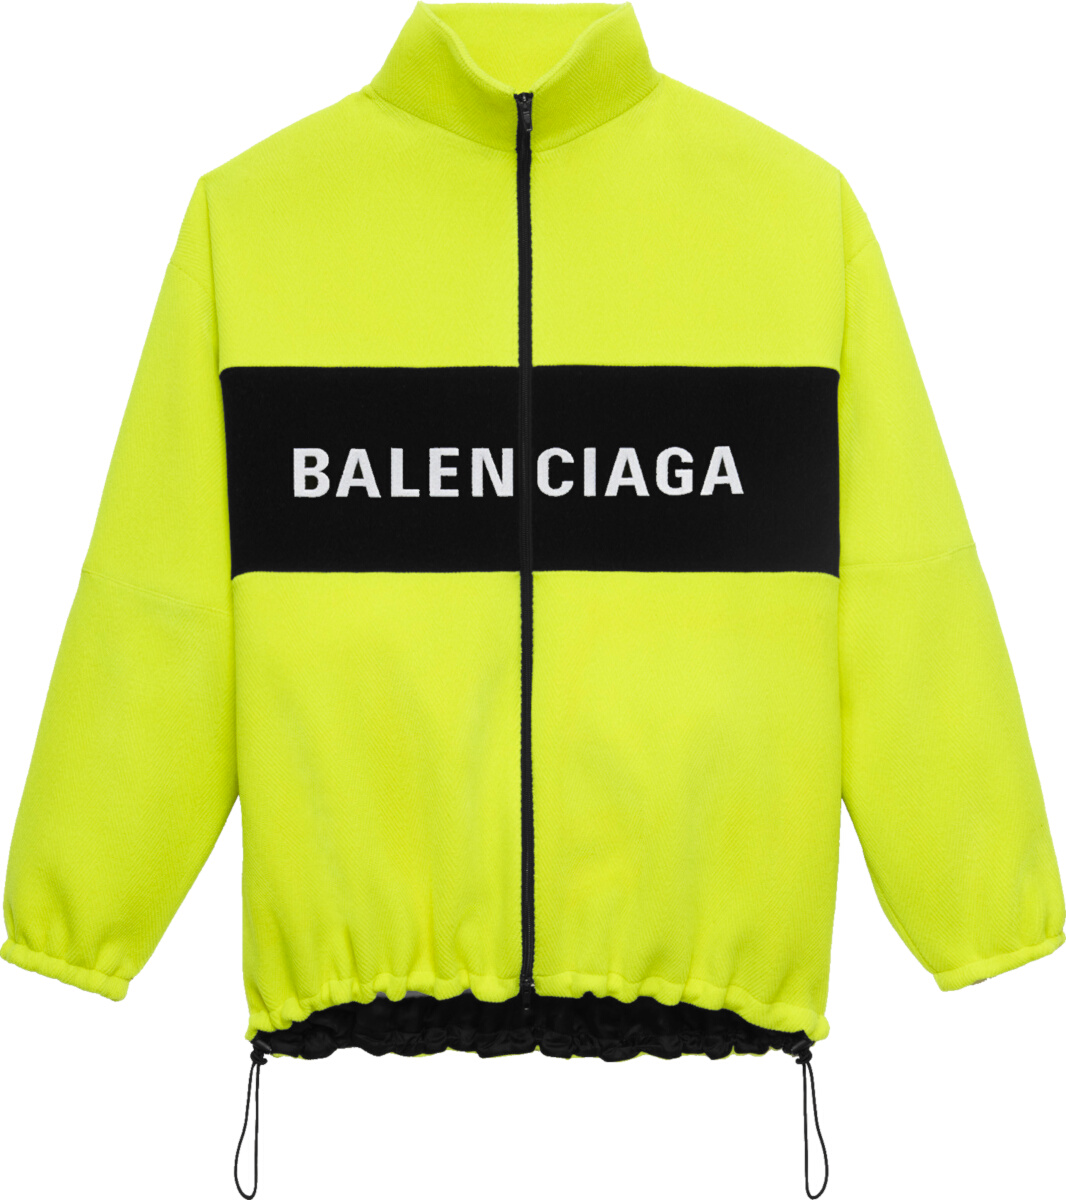 Balenciaga Yellow & Black-Stripe Zip Jacket | Incorporated Style